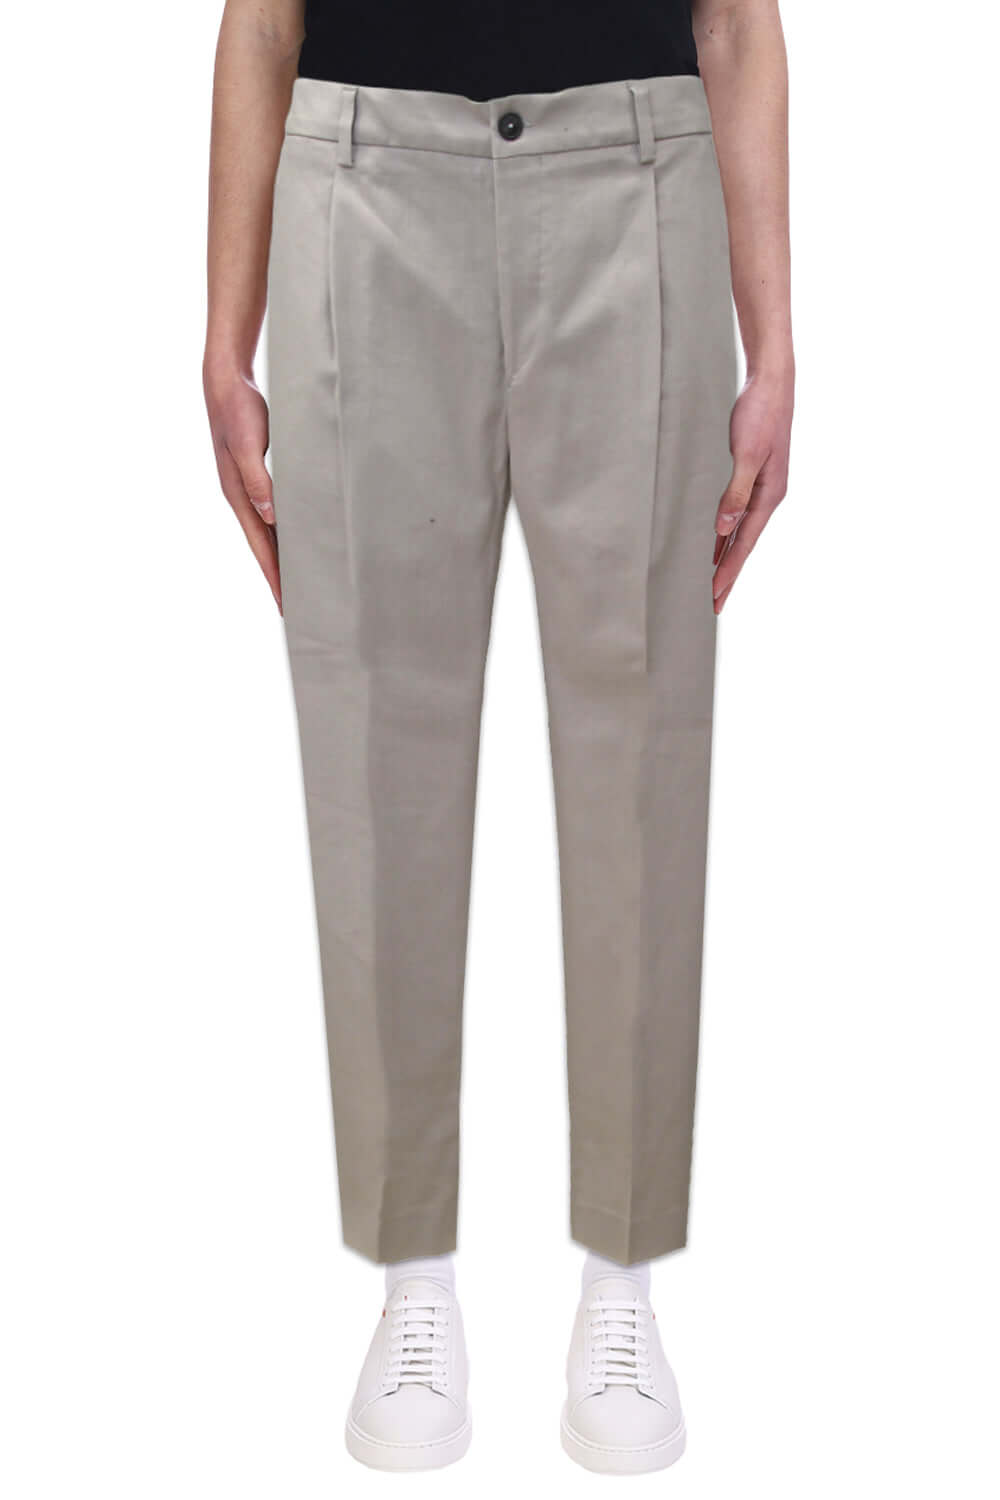 Image of Pantalone con pence ed elastico - BE ABLE